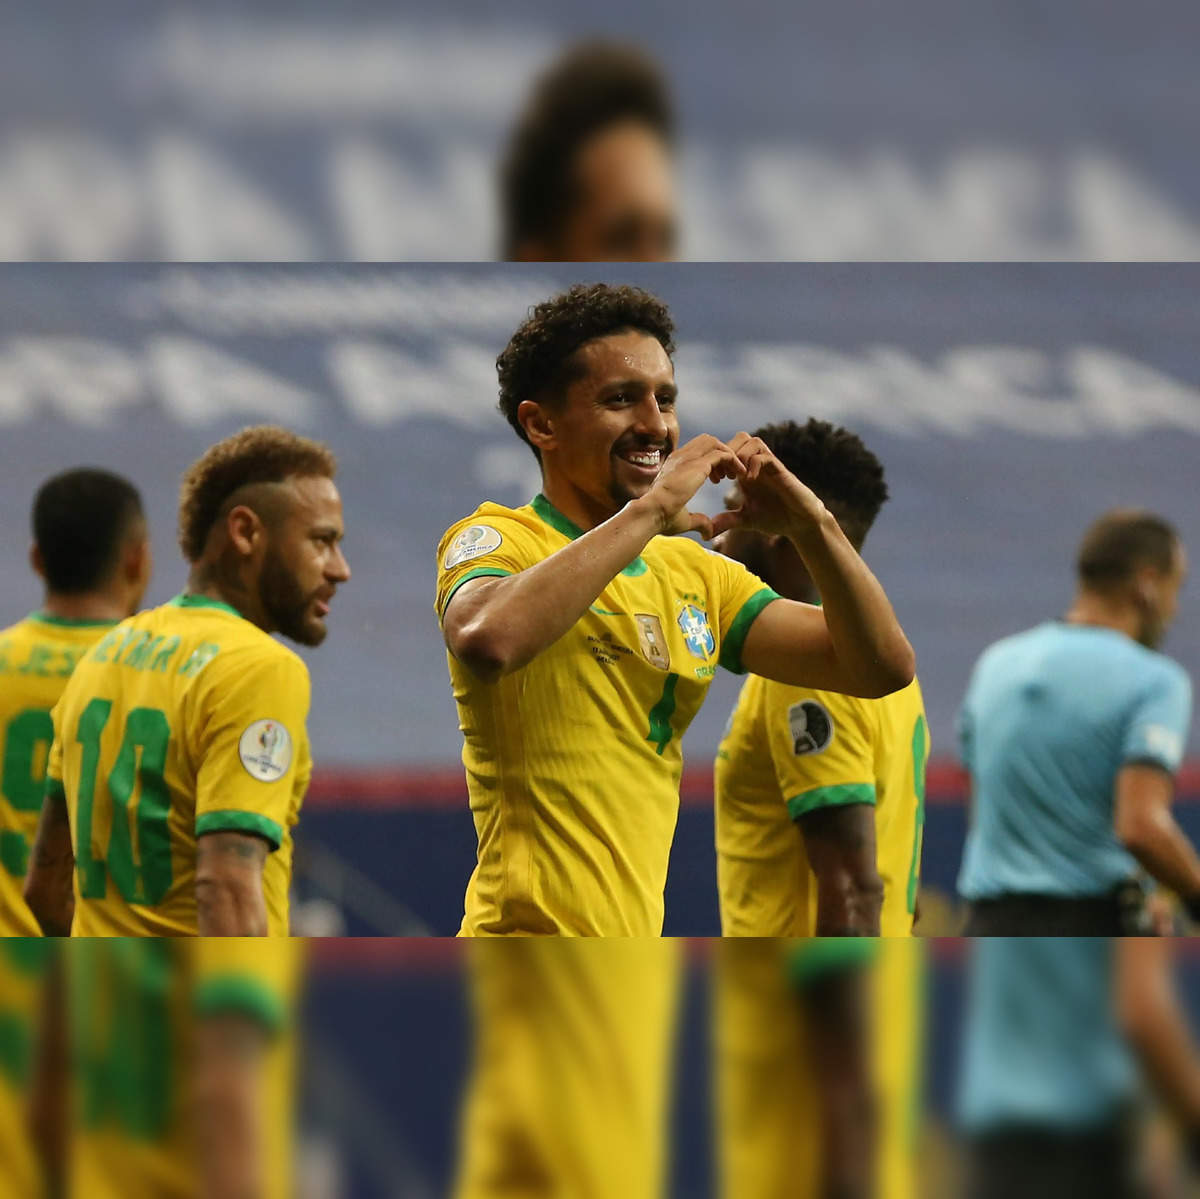 Vinicius Jr injury update: Brazil star returns ahead of schedule